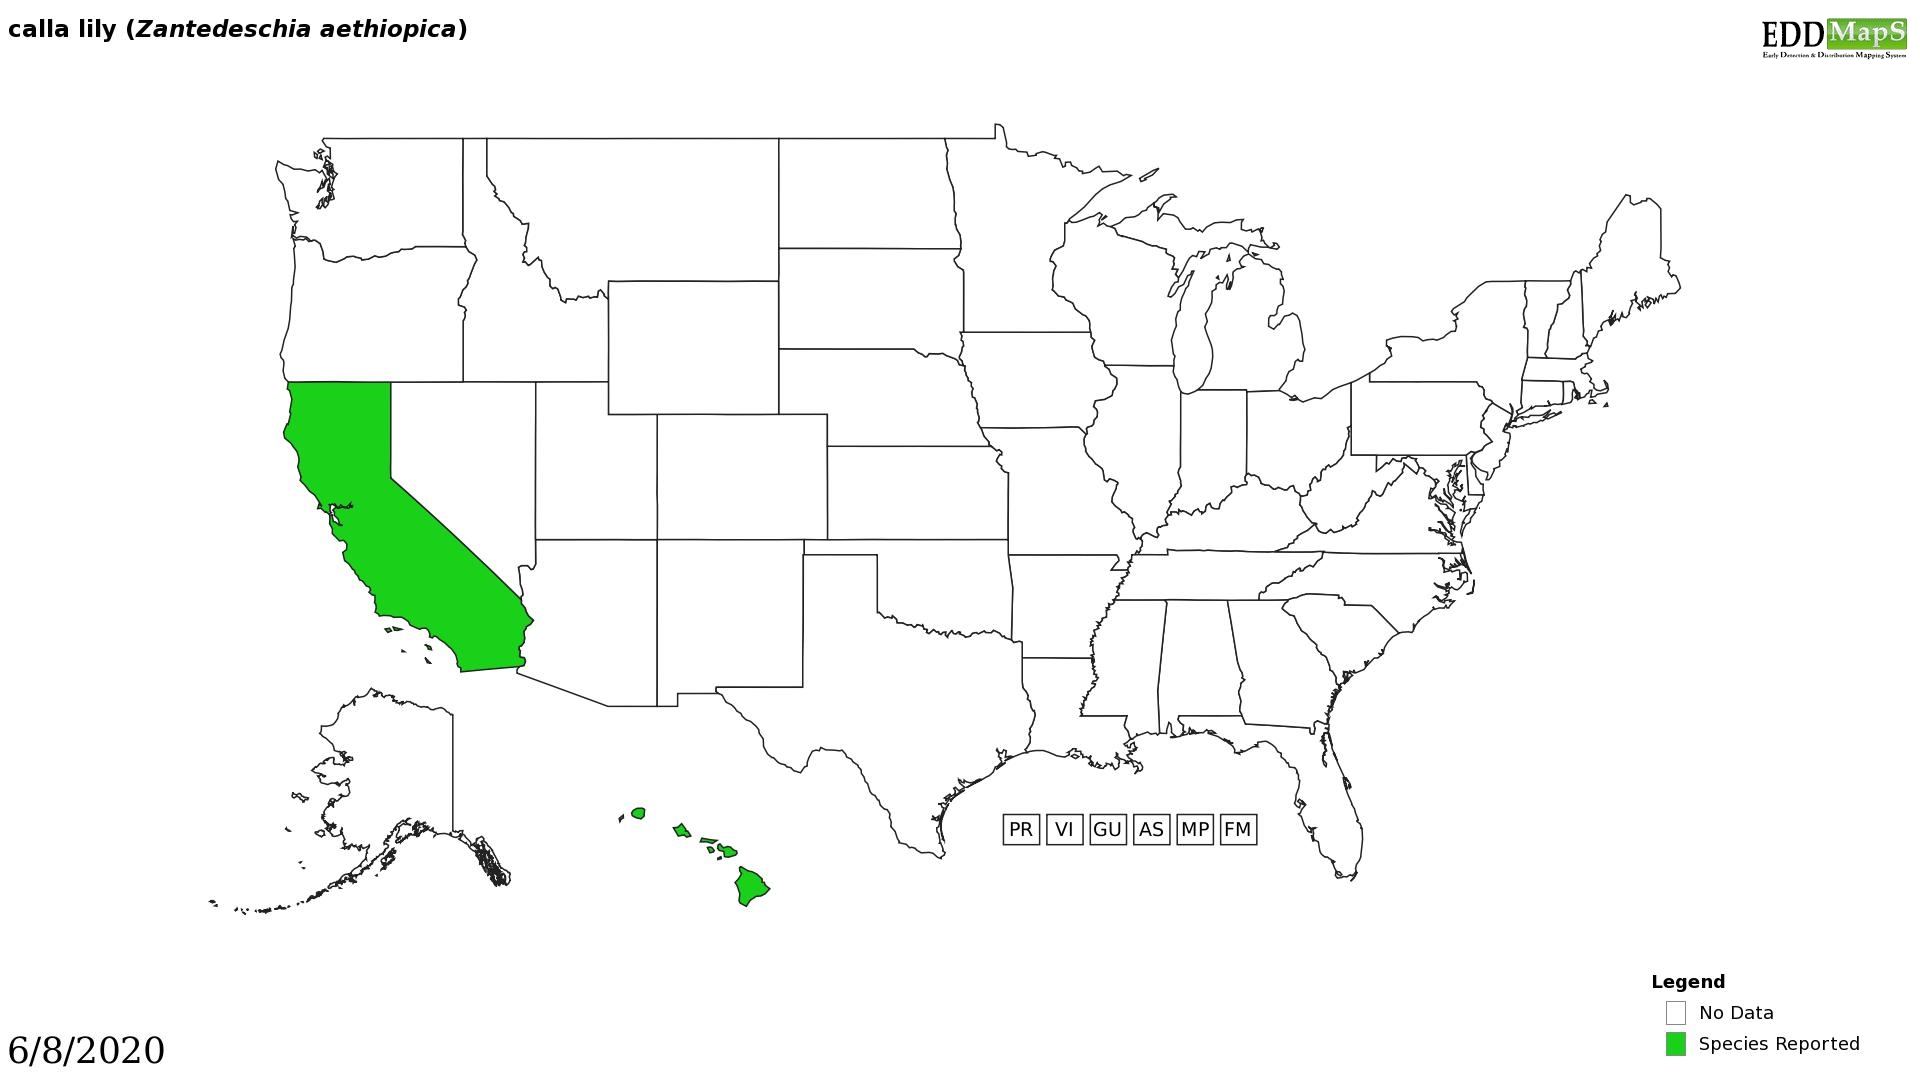 Calla lily distribution - United States